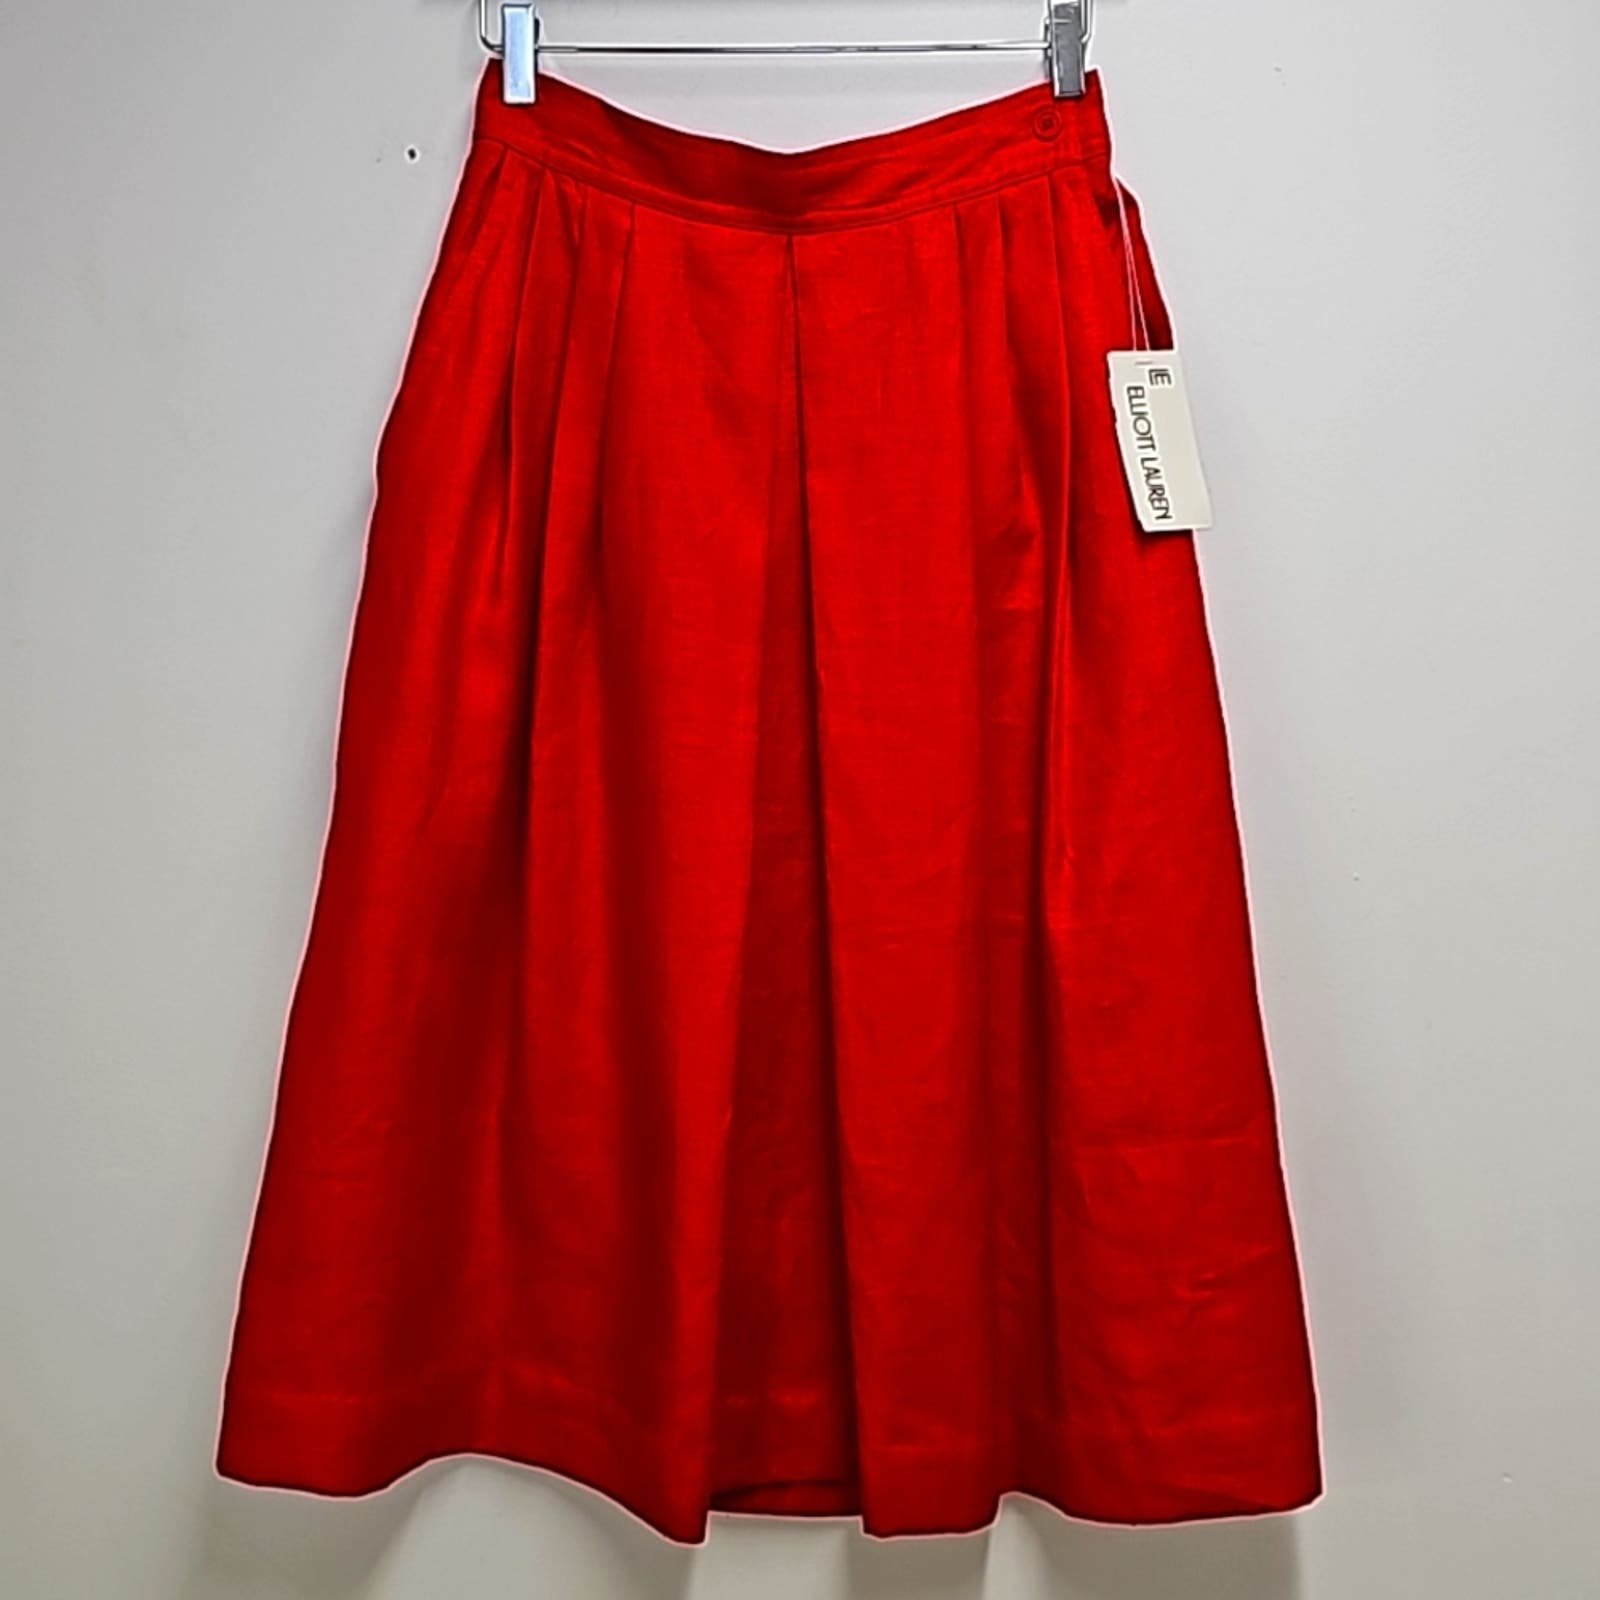 Authentic Elliot Lauren Vintage 100% Linen Midi Skirt R